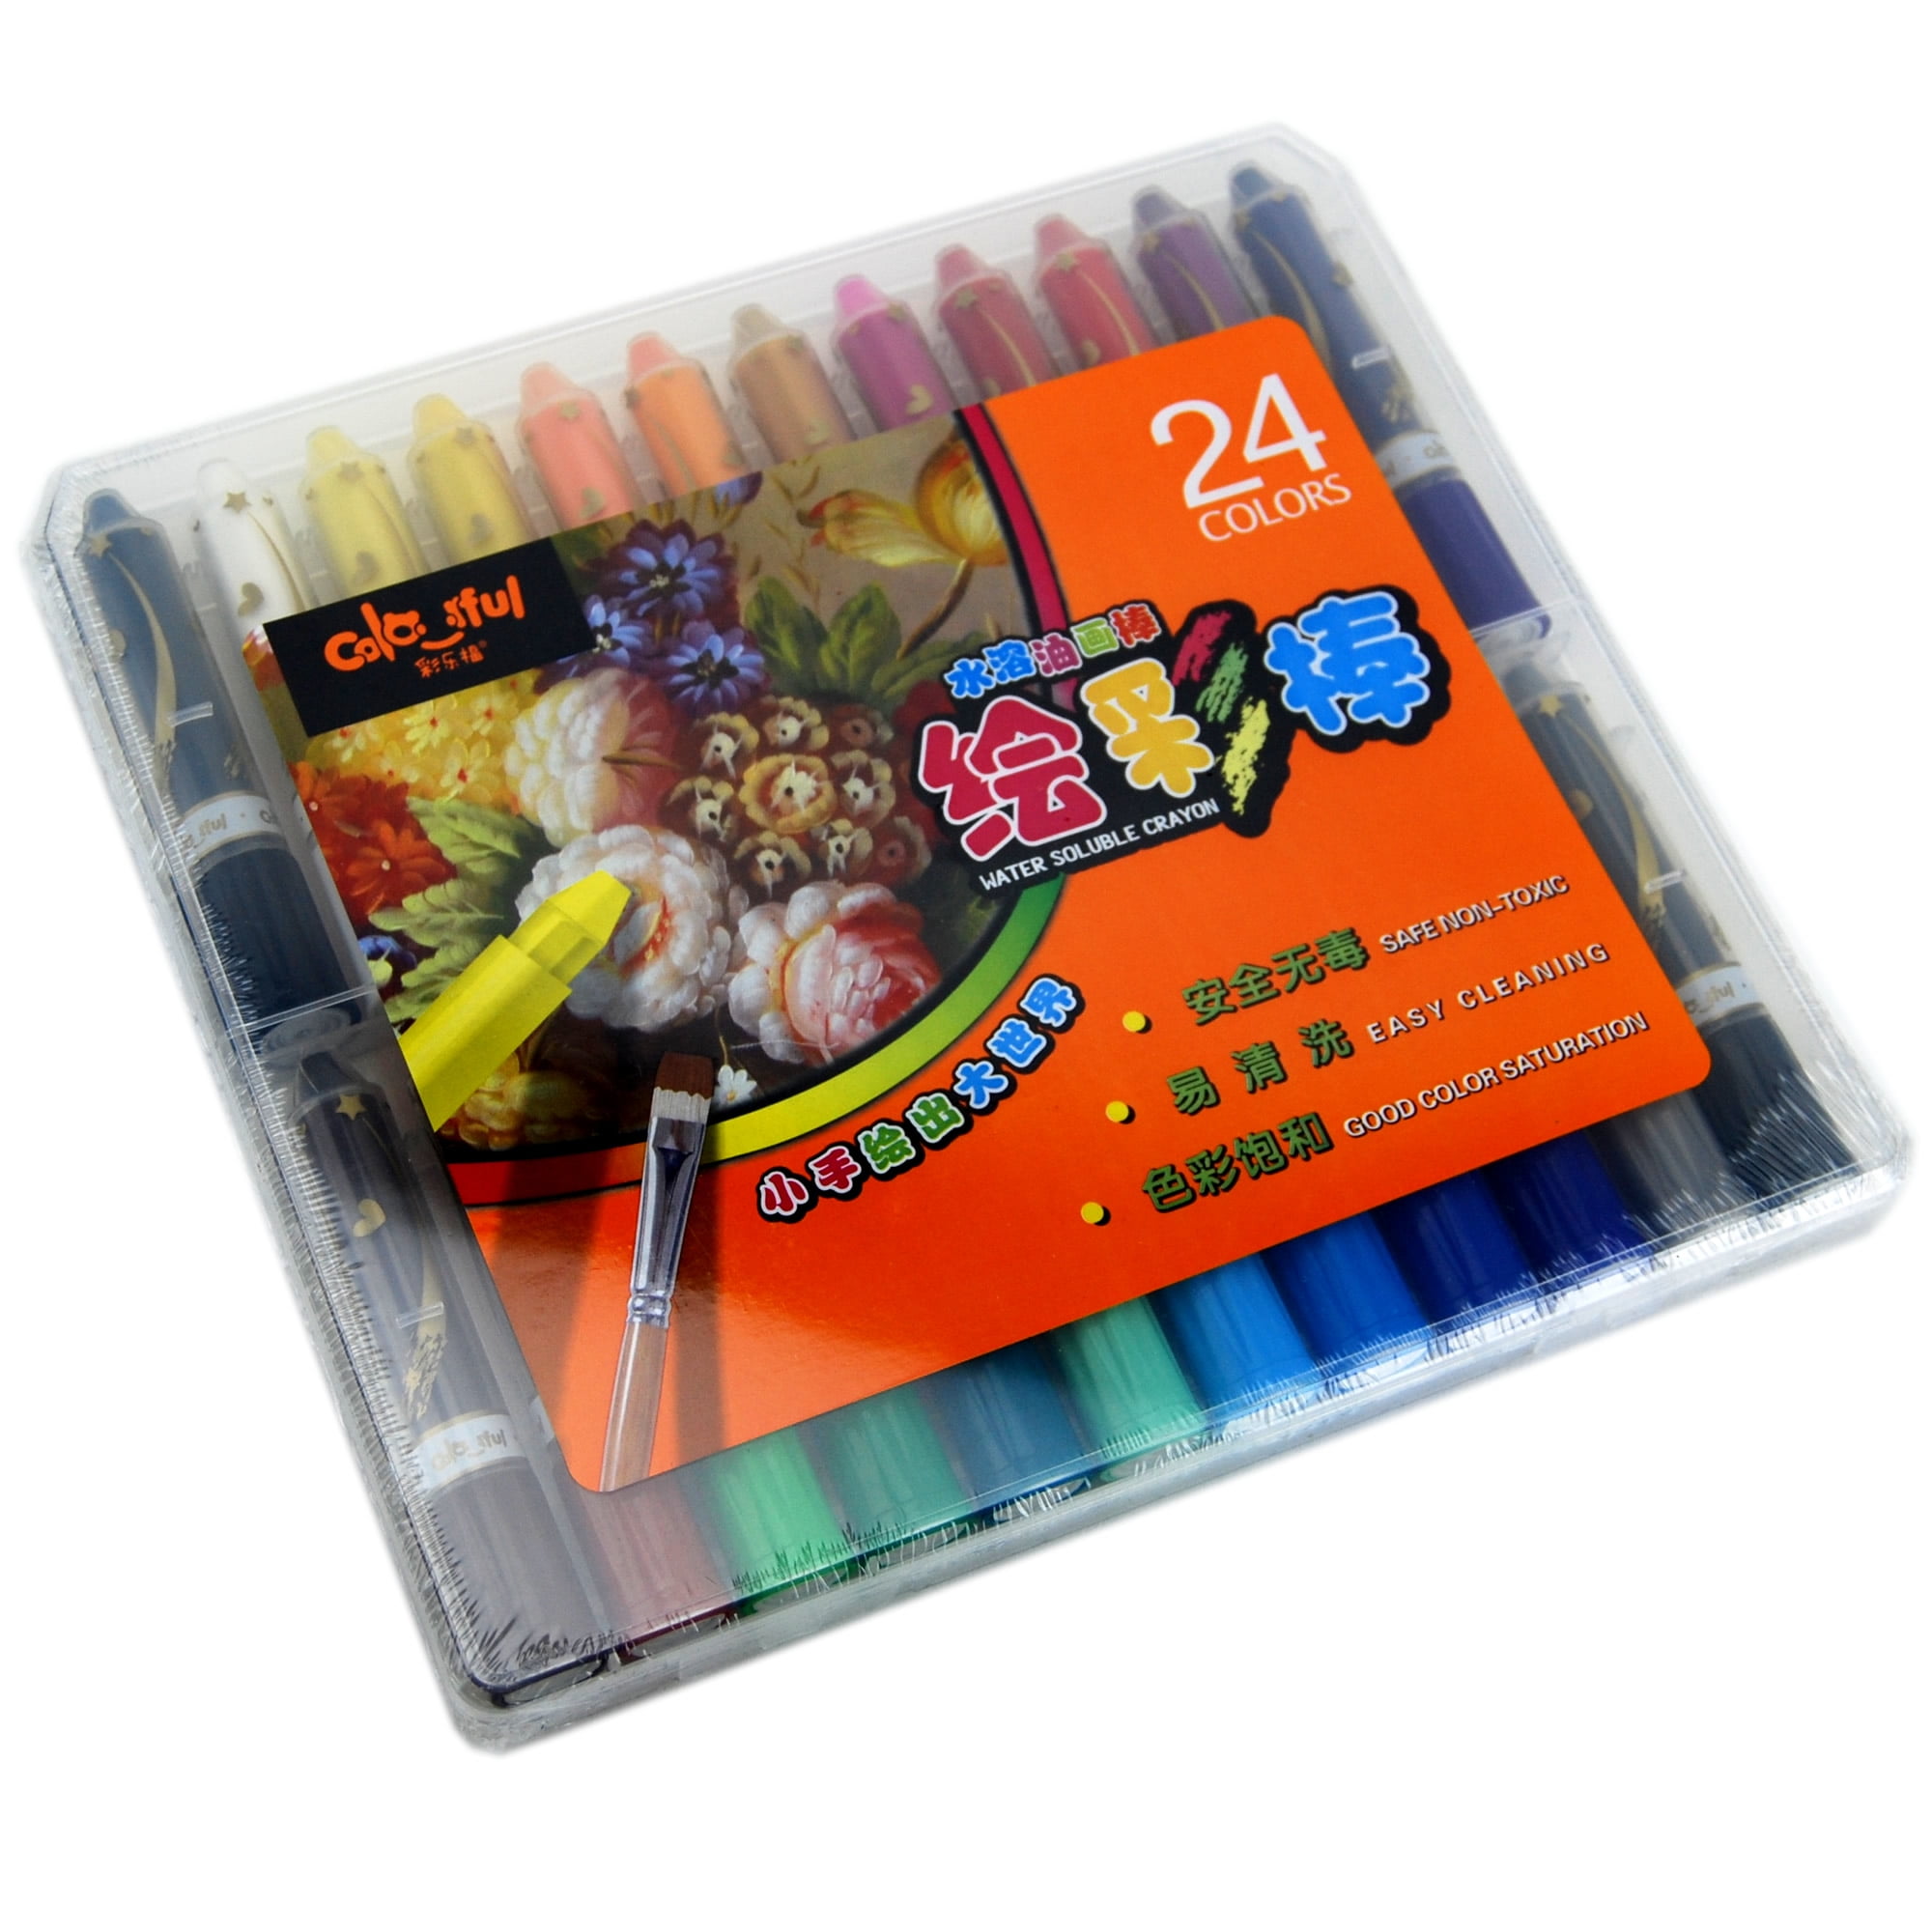 Korean Memory 24 Colors Professional Water Soluble Crayon Set